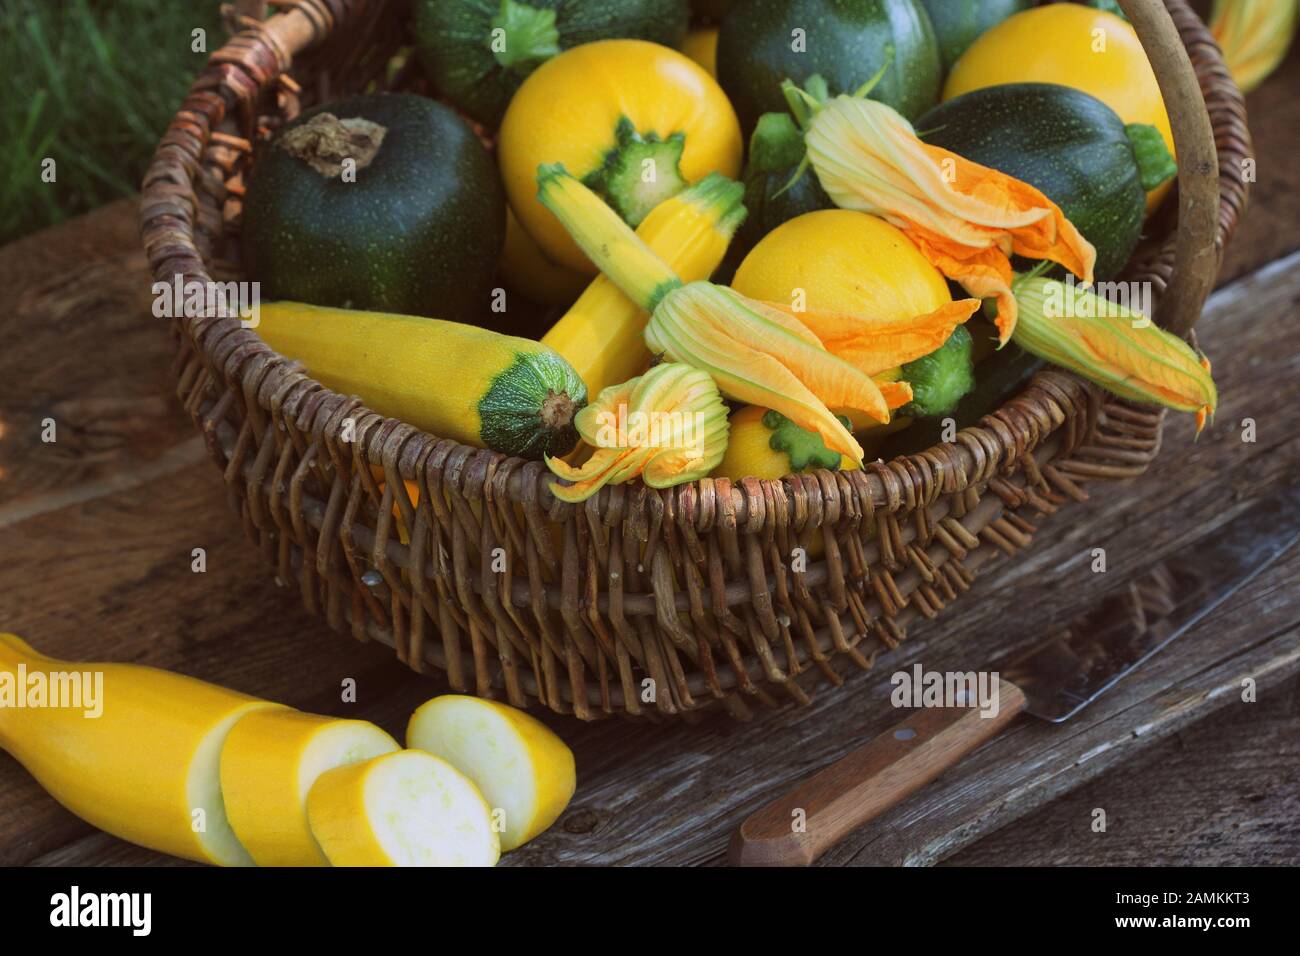 Harvesting zucchini. Fresh squash lying in basket. Fresh squash picked from the garden. Organic food concept Stock Photo